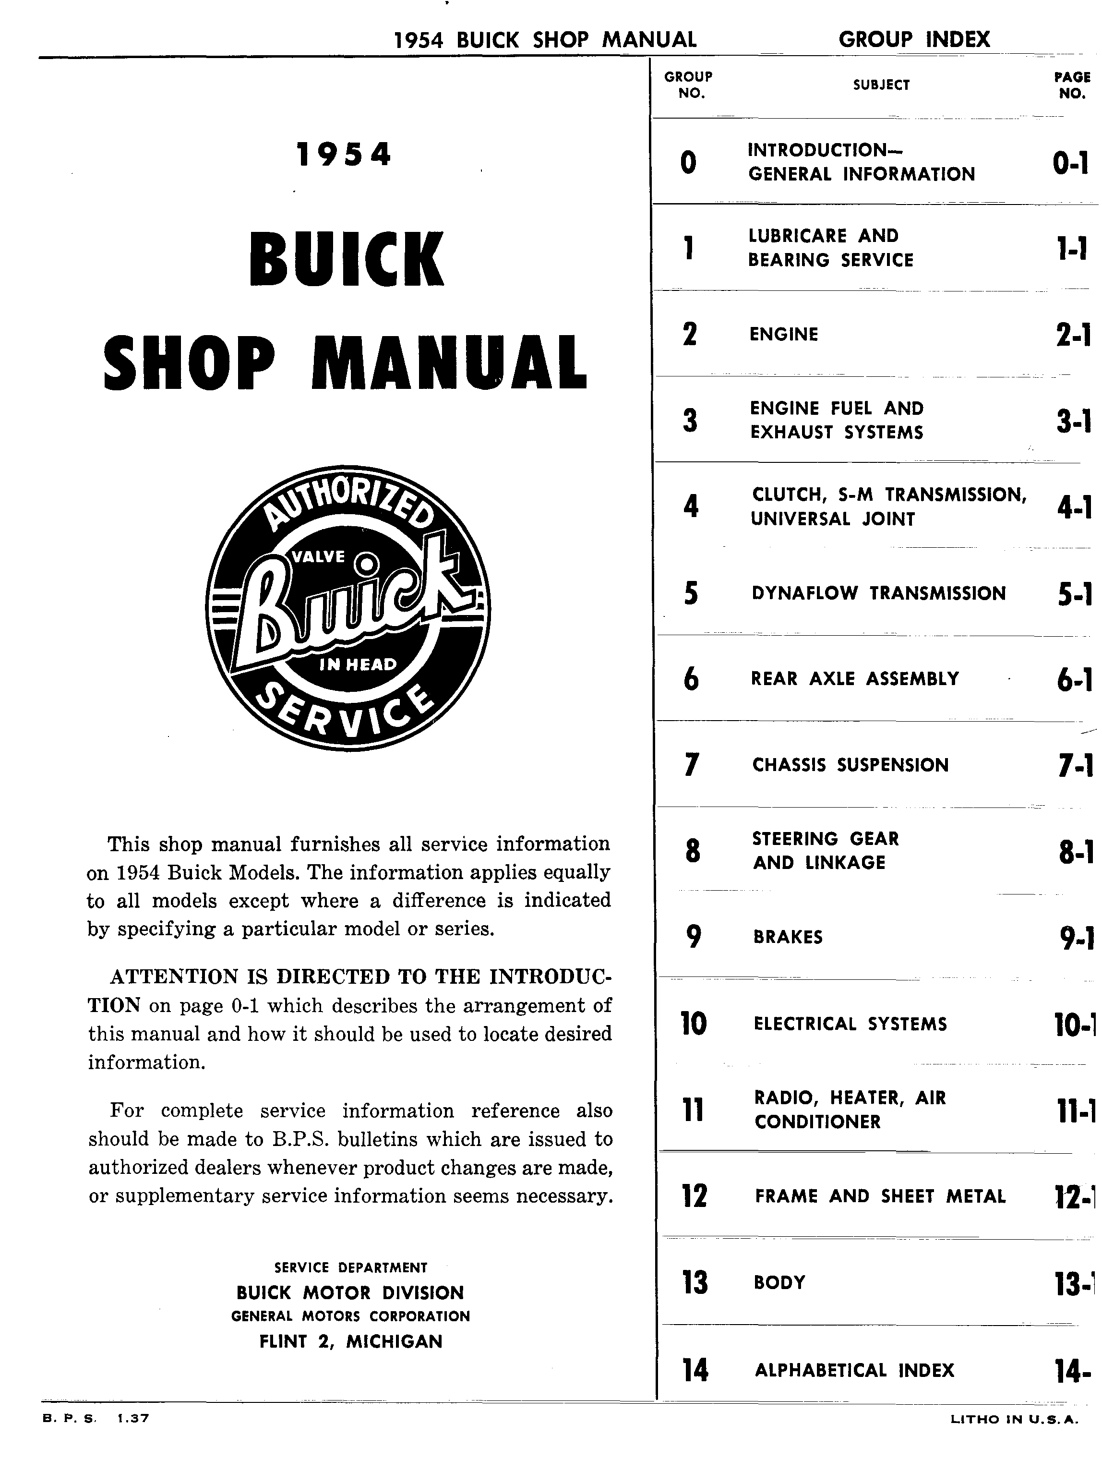 n_01 1954 Buick Shop Manual - Gen Information-002-002.jpg